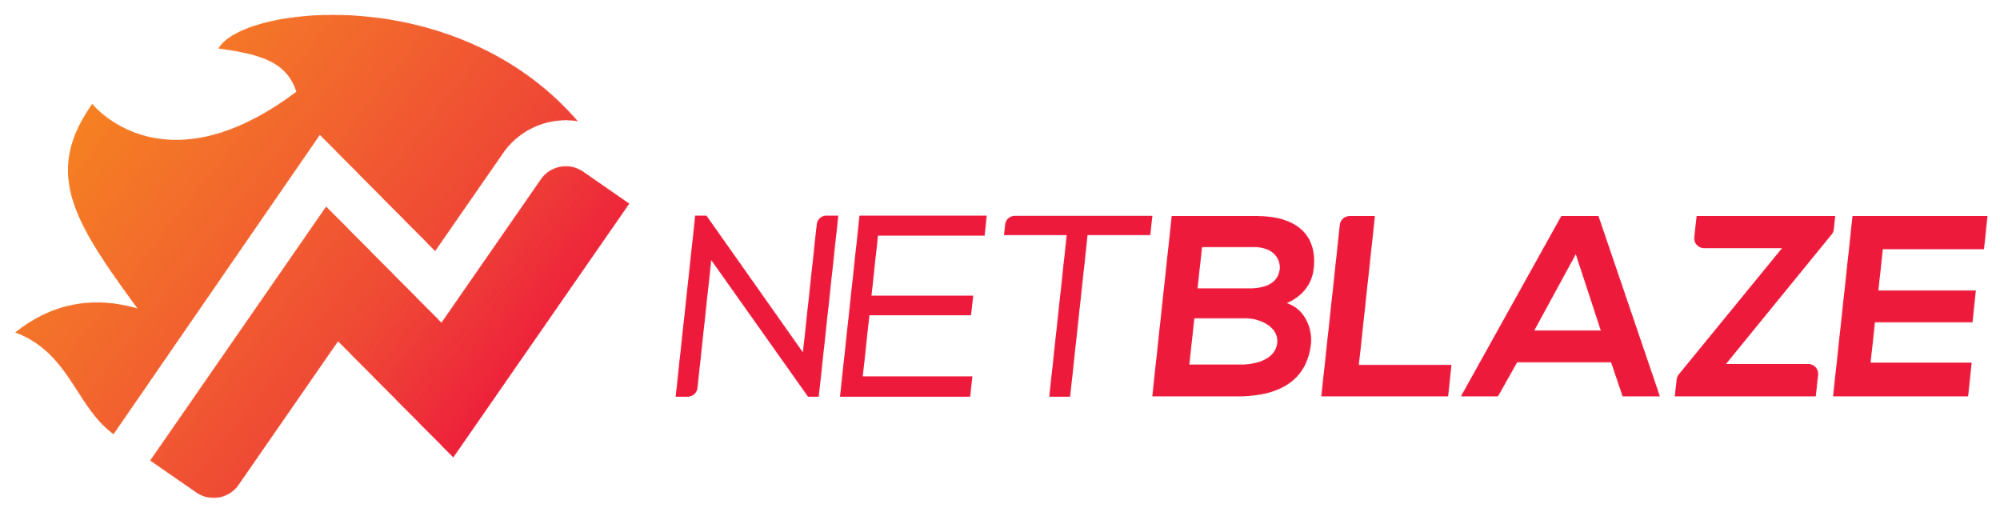 NetBlaze Logo.png